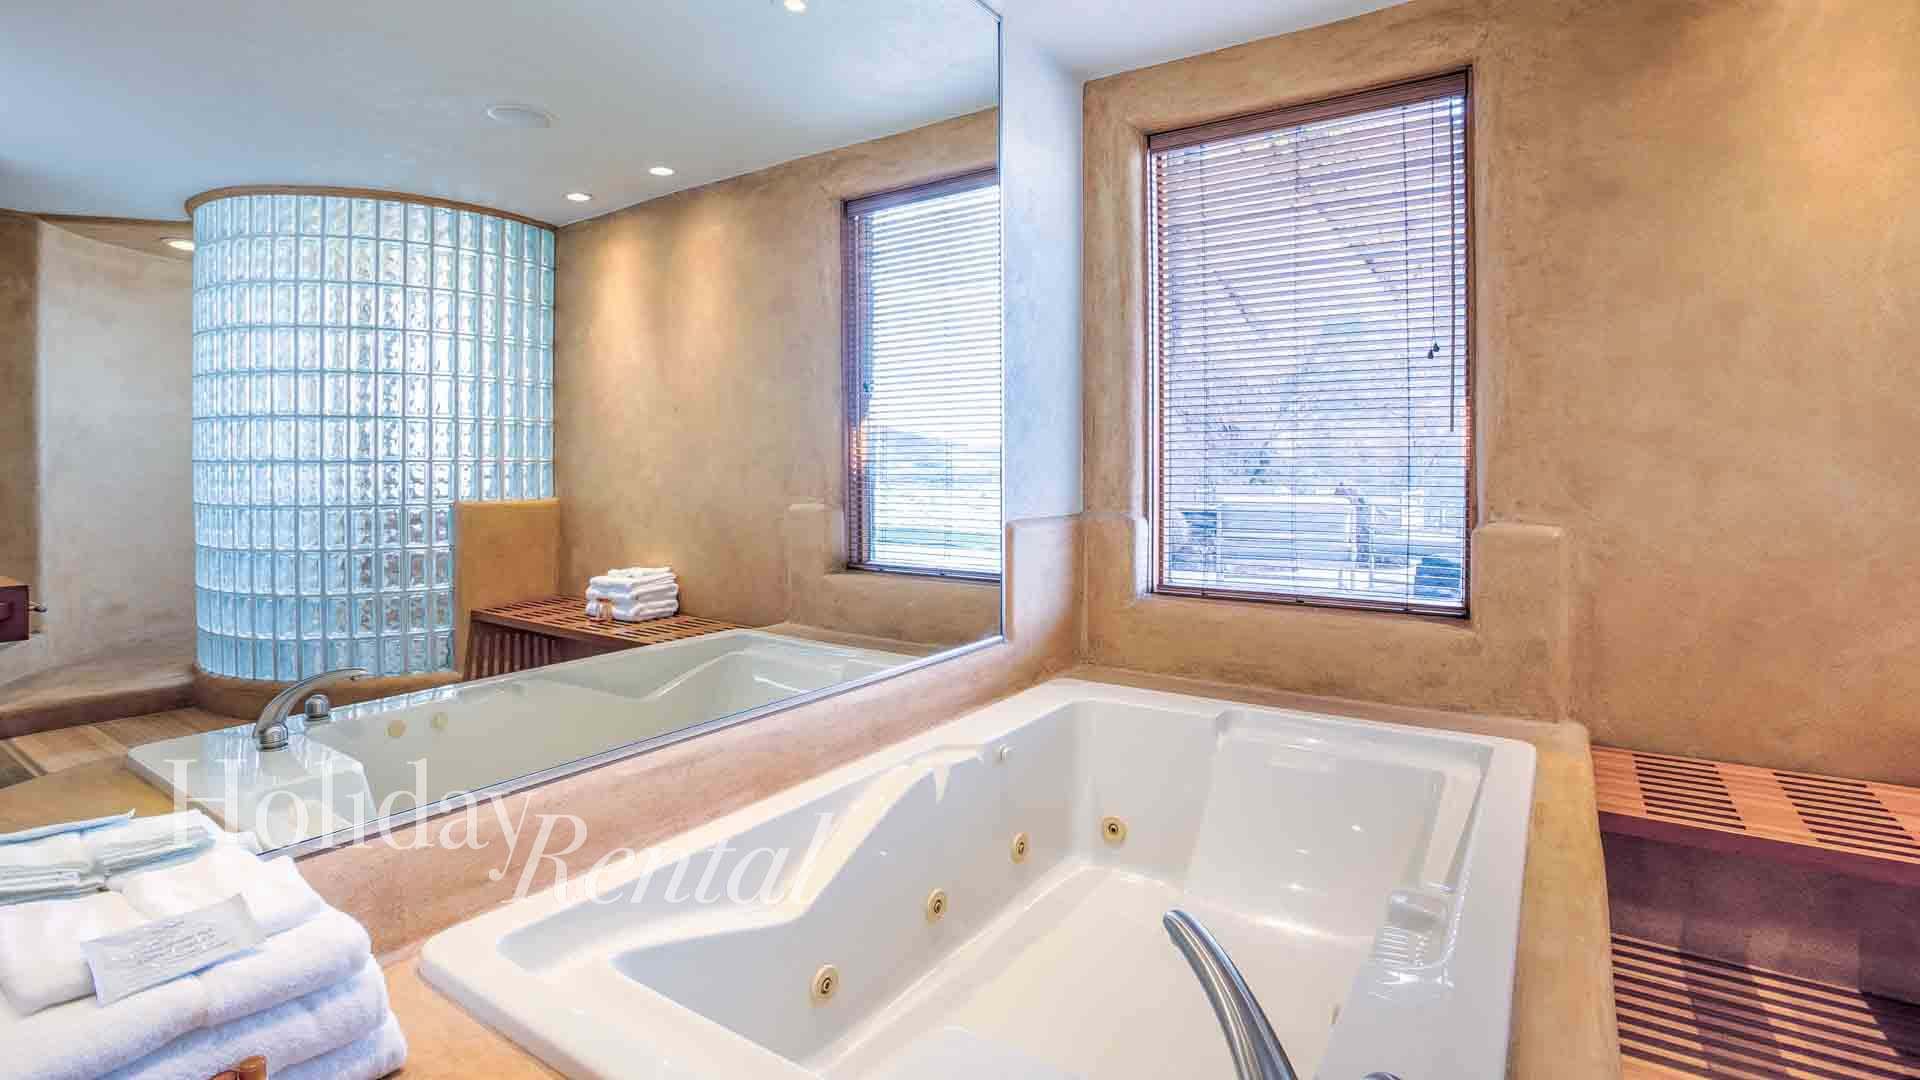 Bathroom 3 - En Suite for Bedroom 3 including soaking tub and walk-in shower